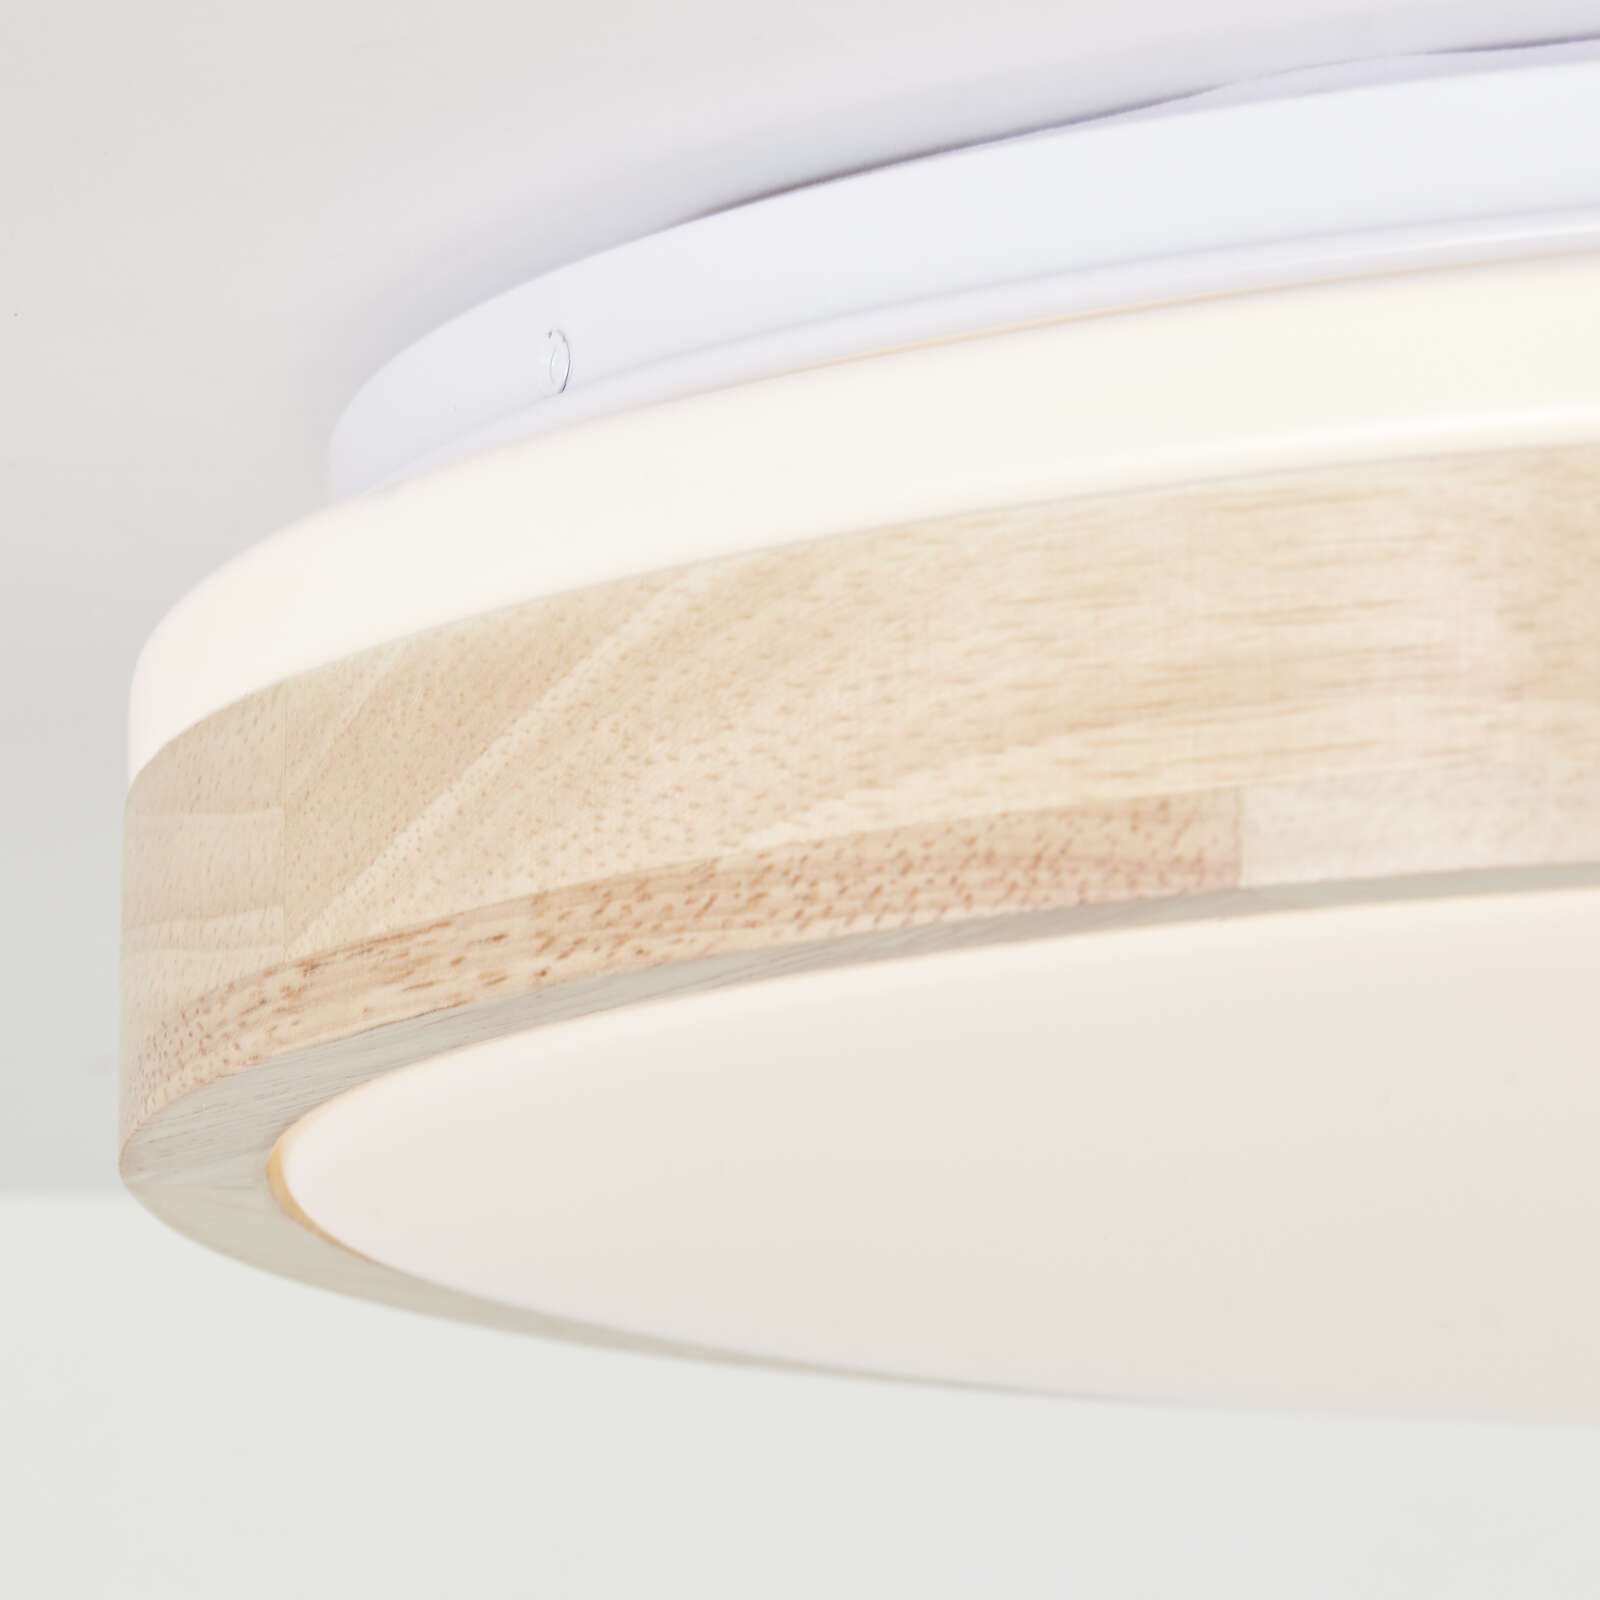             Wooden ceiling light - Cleo - Beige
        